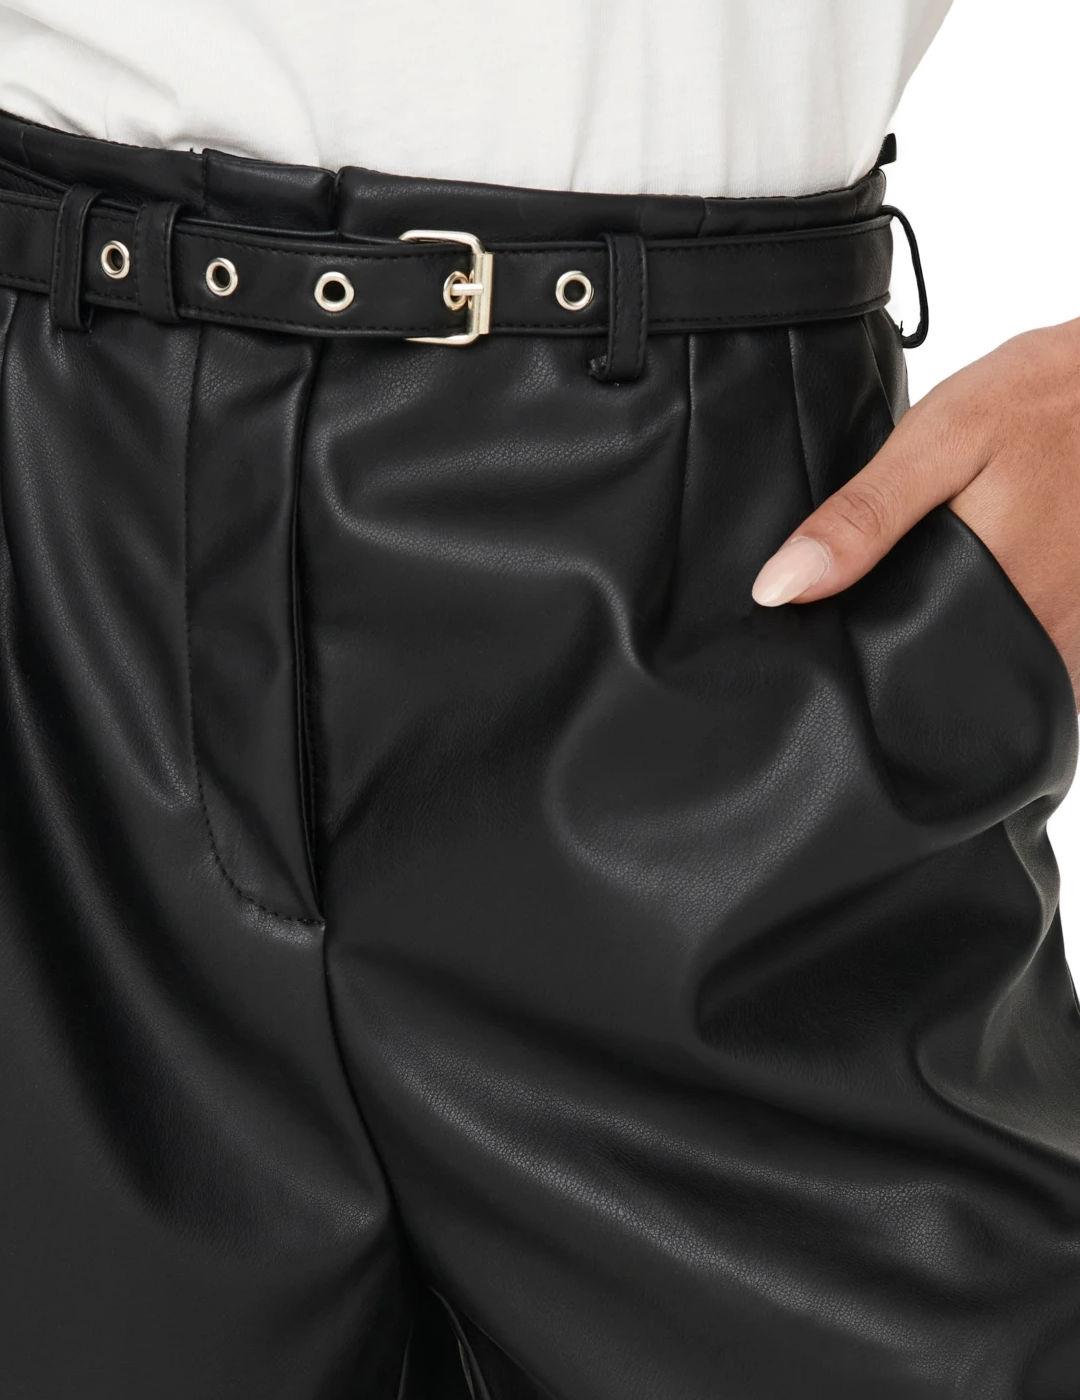 Shorts Only Heidi polipiel negro cinturón de mujer